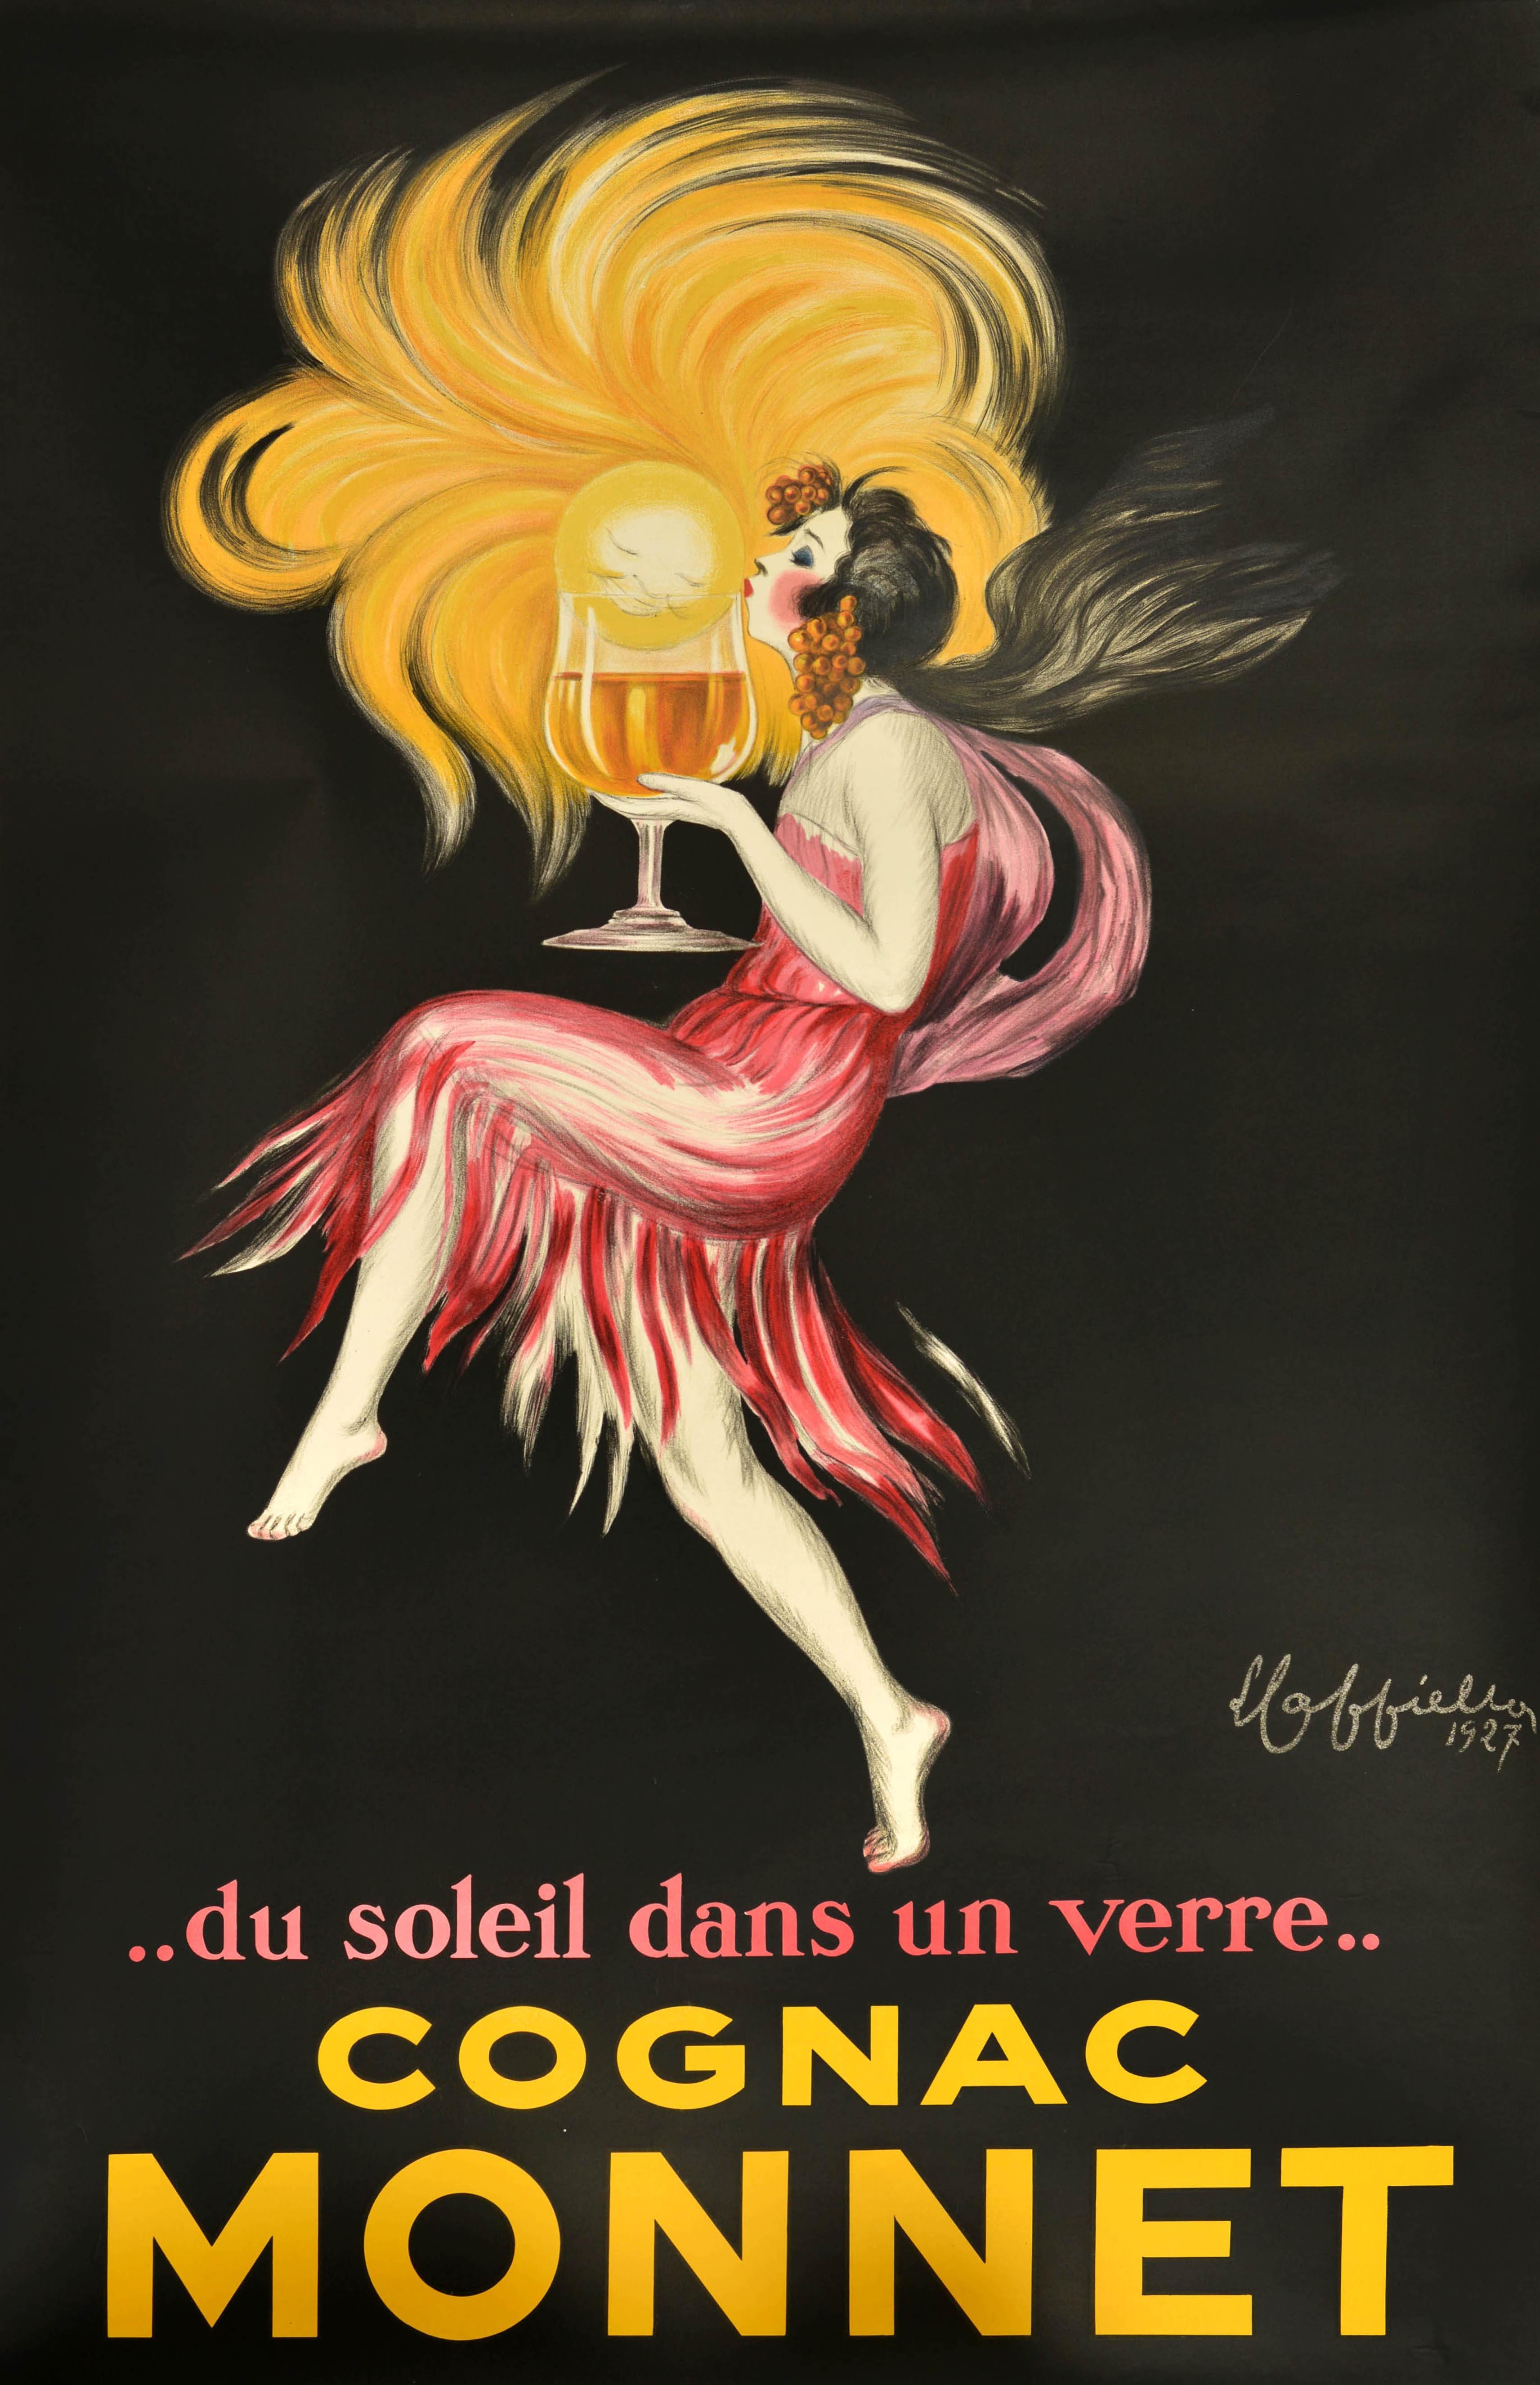 Original Vintage Drink Advertising Poster Cognac Monnet Leonetto Cappiello For Sale 1